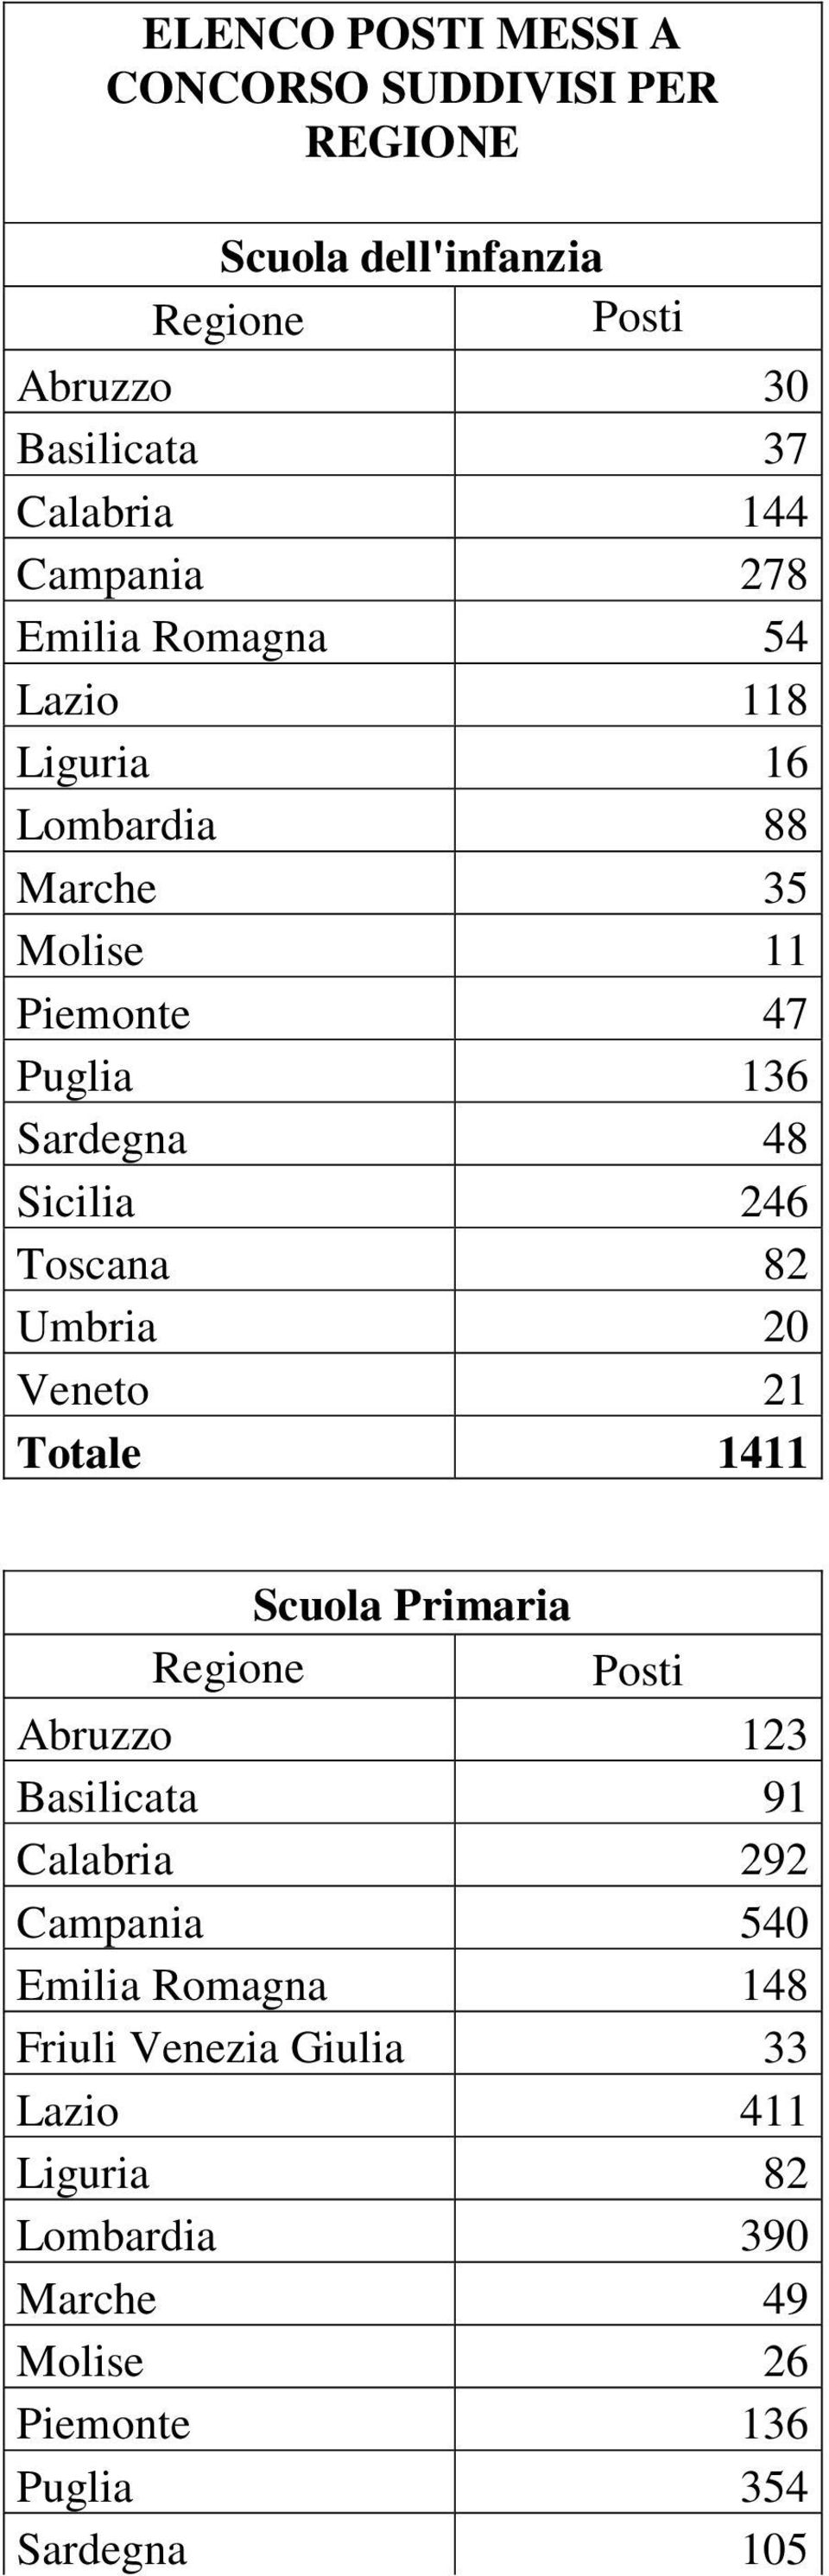 Toscana 82 Umbria 20 Veneto 21 Totale 1411 Scuola Primaria Abruzzo 123 Basilicata 91 Calabria 292 Campania 540 Emilia